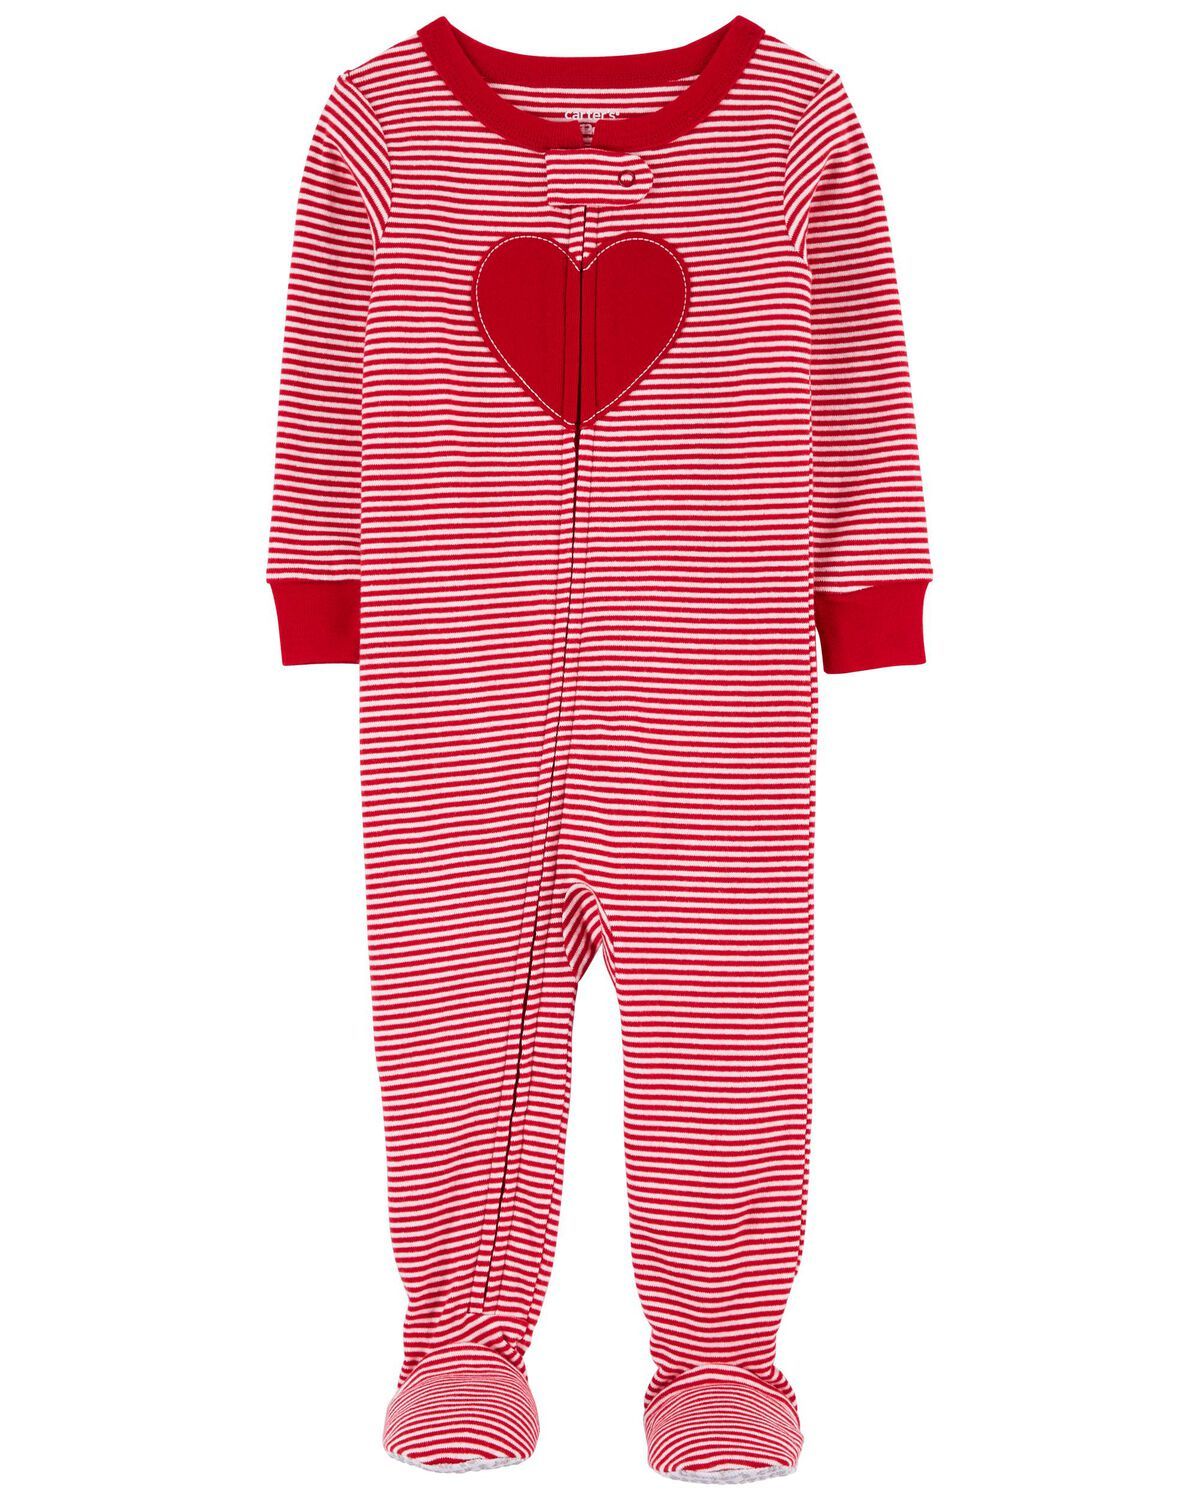 Red Toddler 1-Piece Valentine's Day 100% Snug Fit Cotton Footie Pajamas | carters.com | Carter's